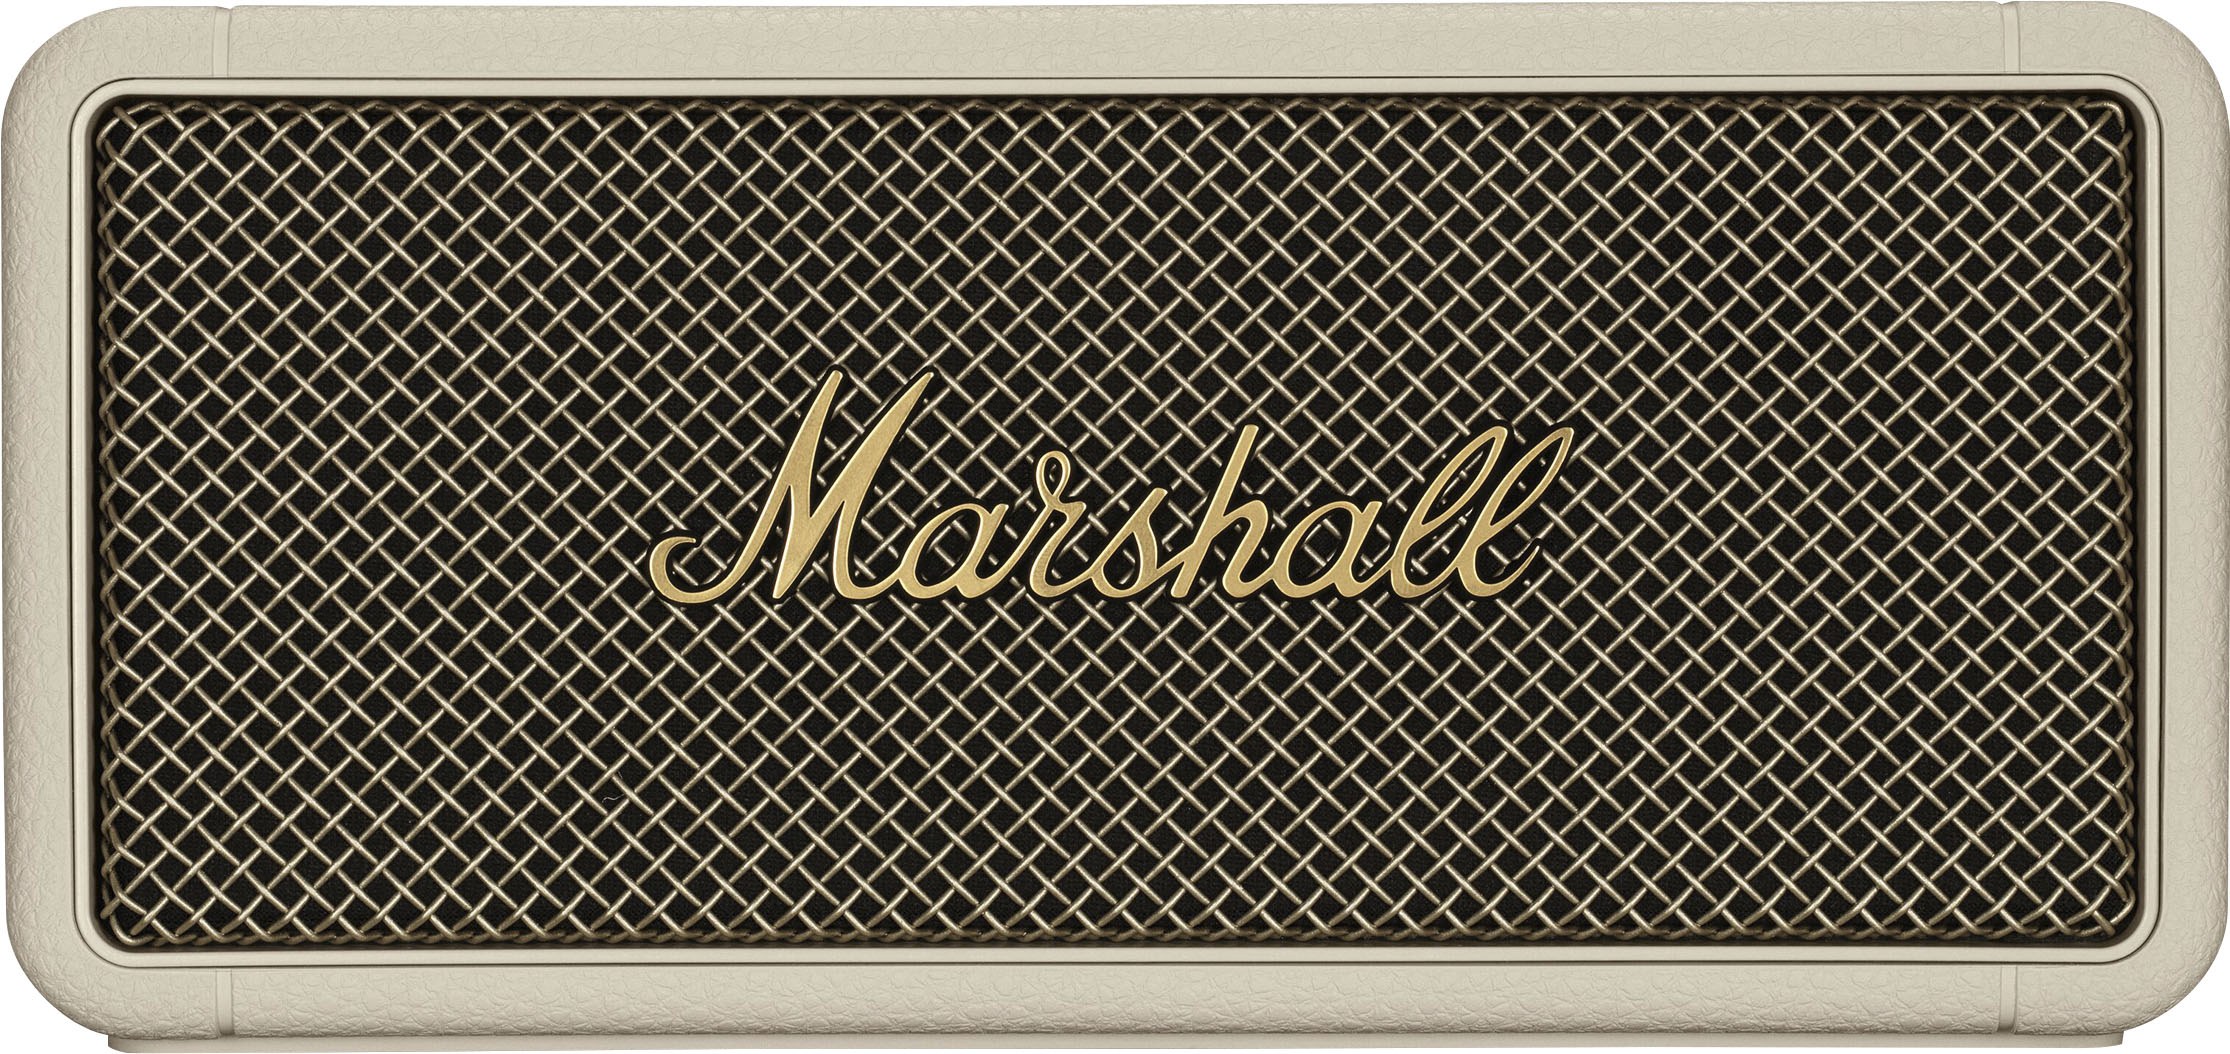 Marshall Emberton II Bluetooth Speaker 1006237 - Best Buy Cream